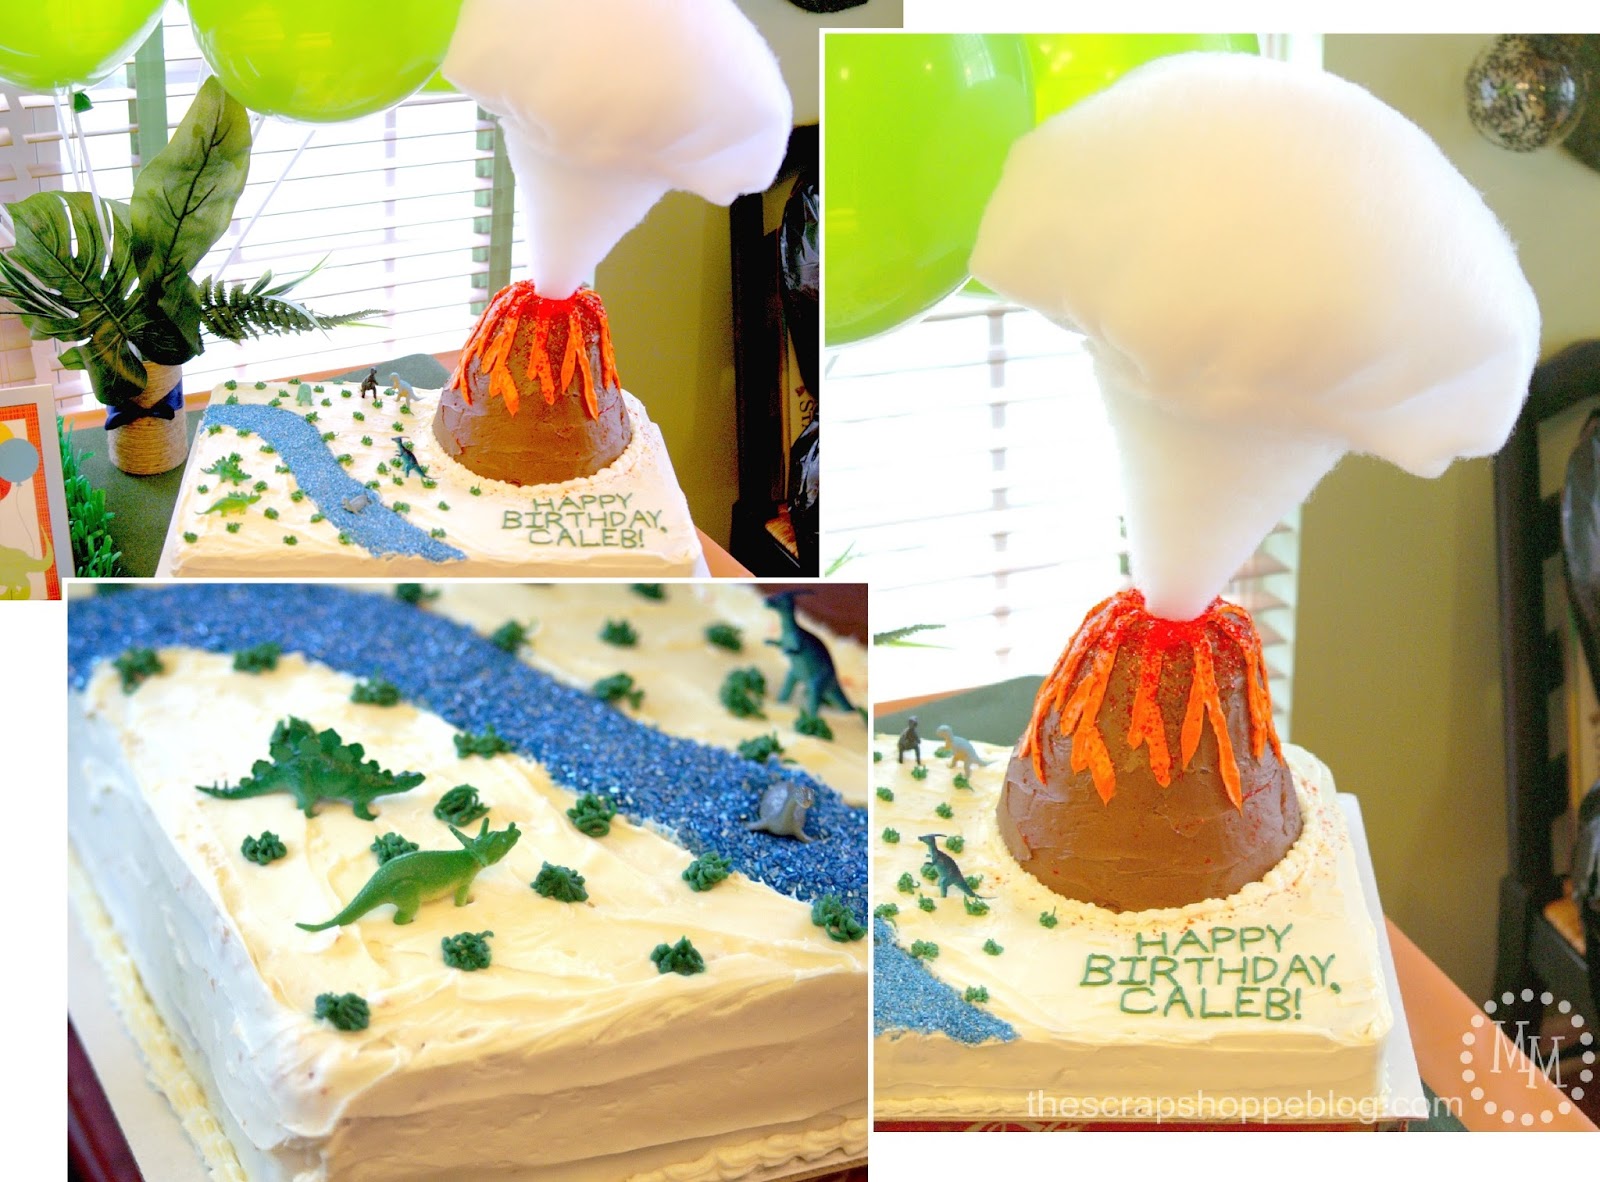 dinosaur volcano birthday cake